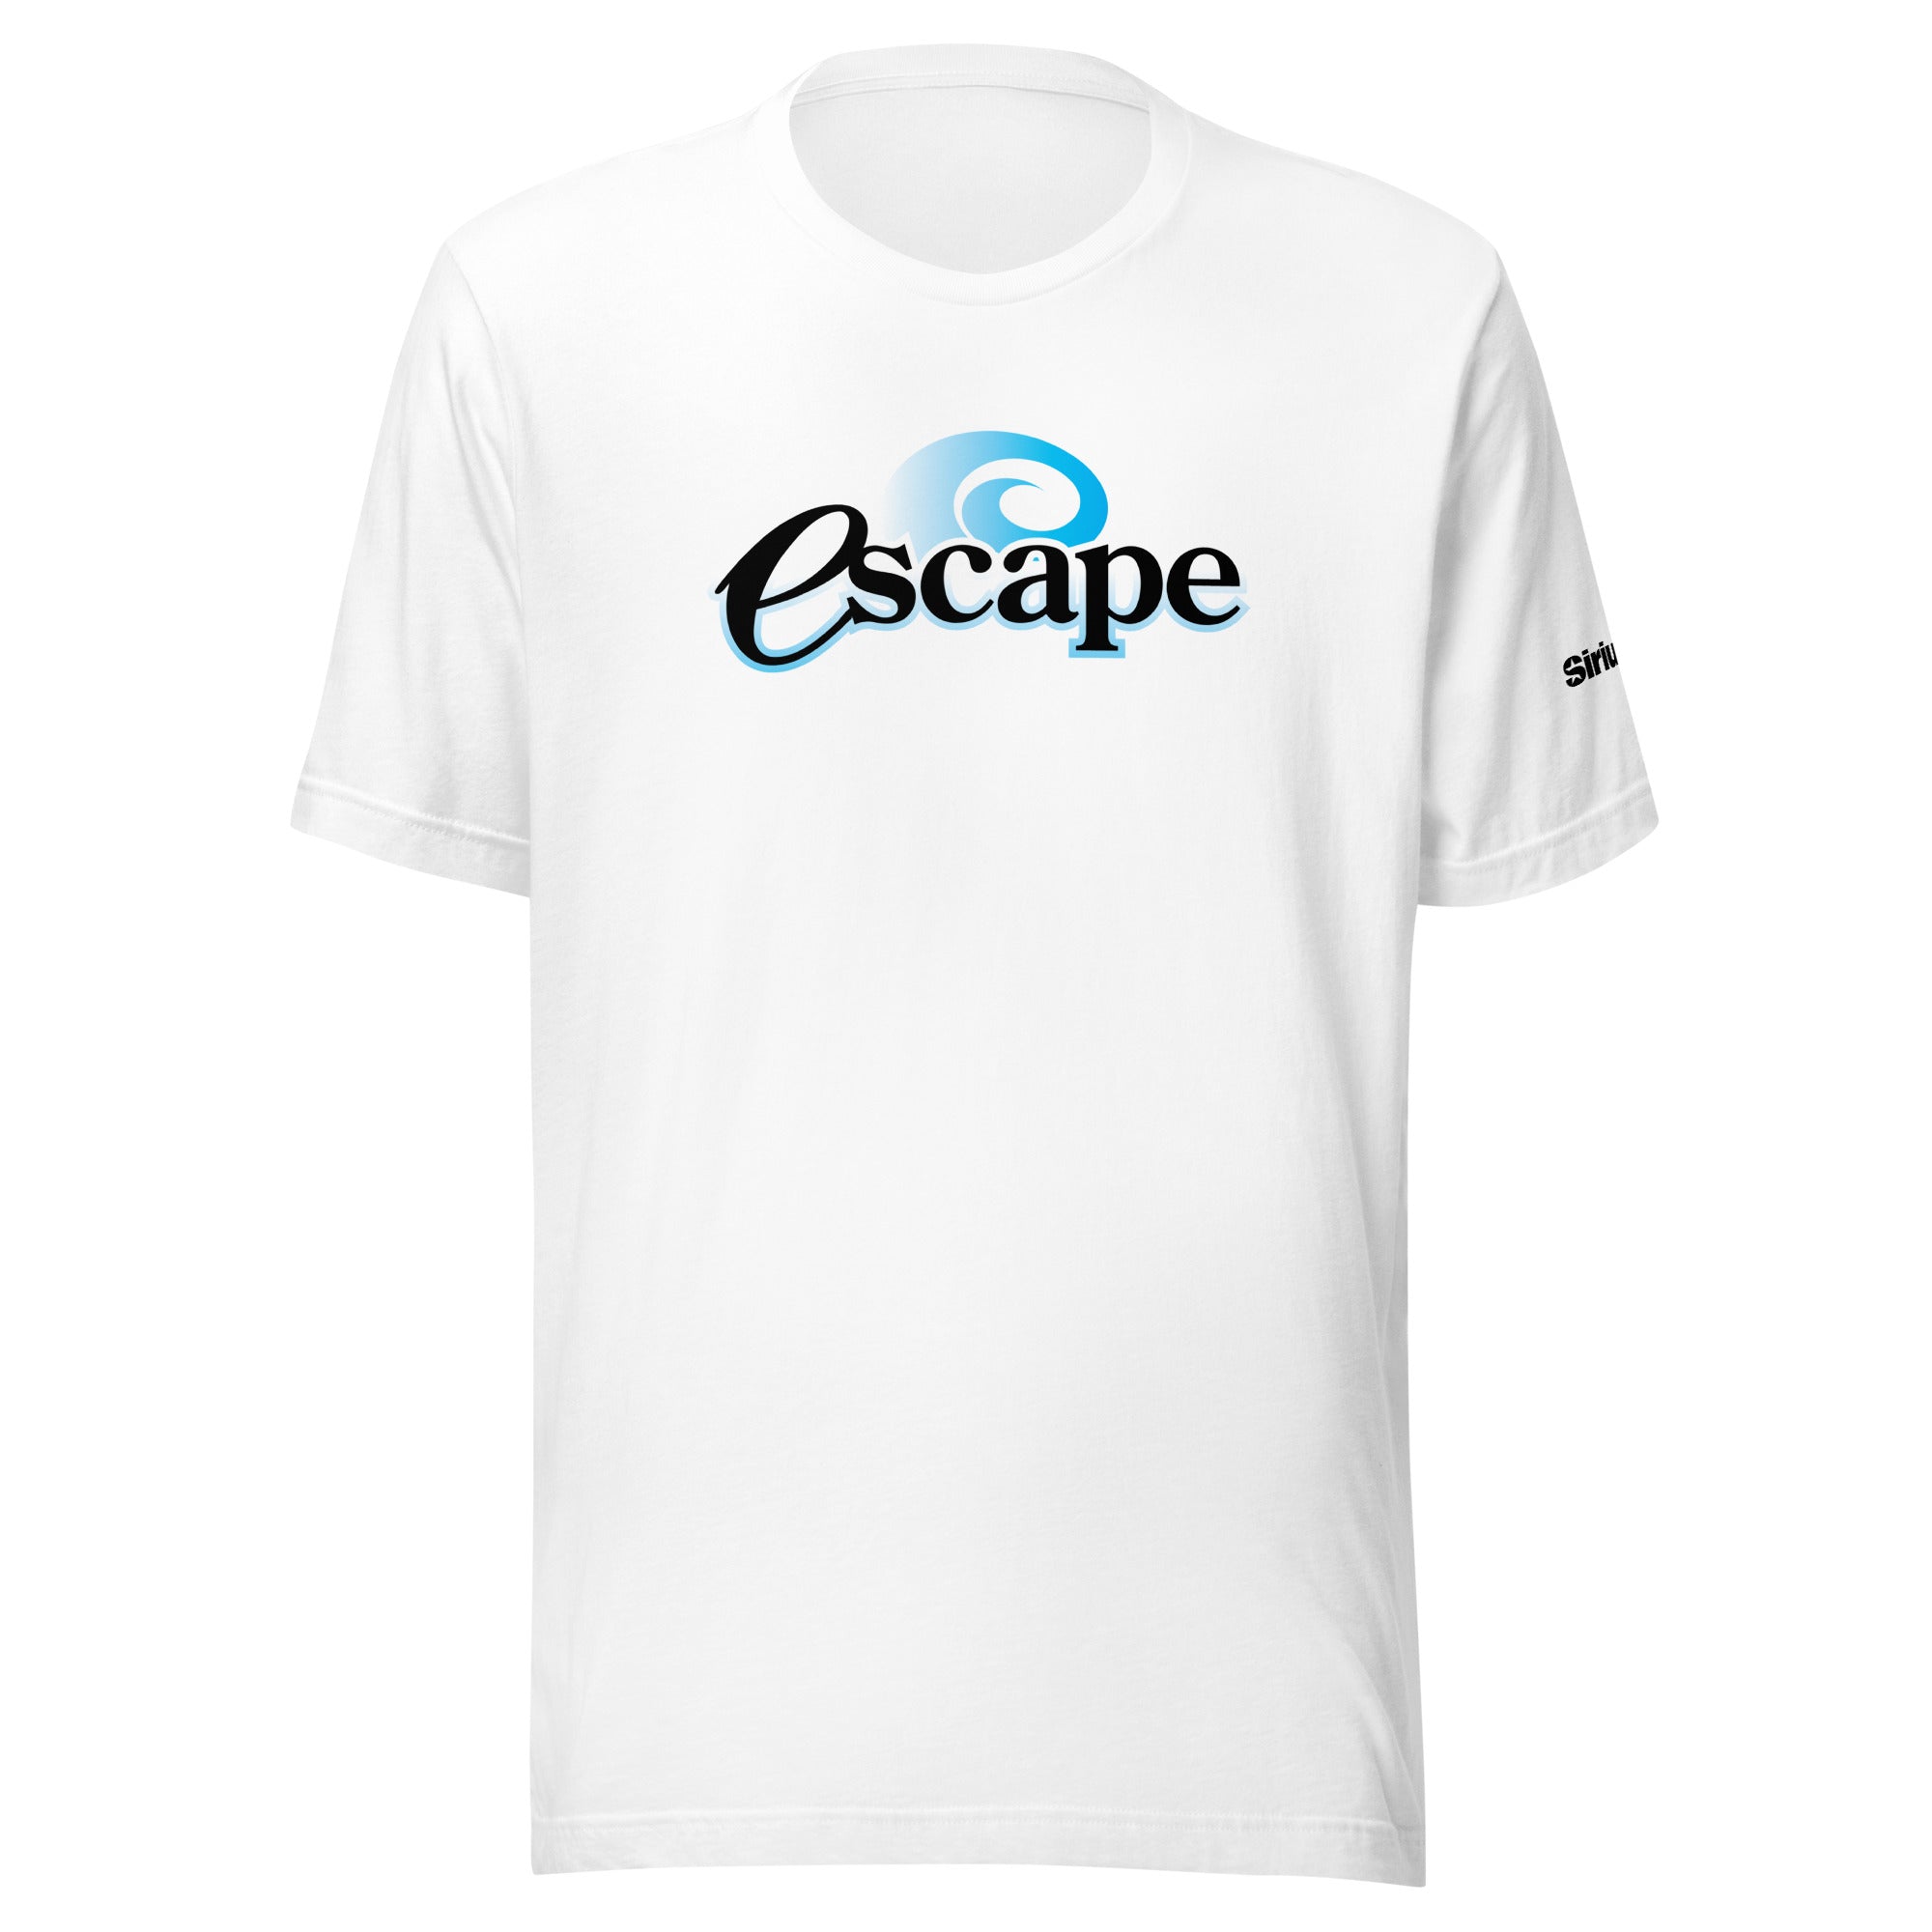 Escape: T-shirt (White)